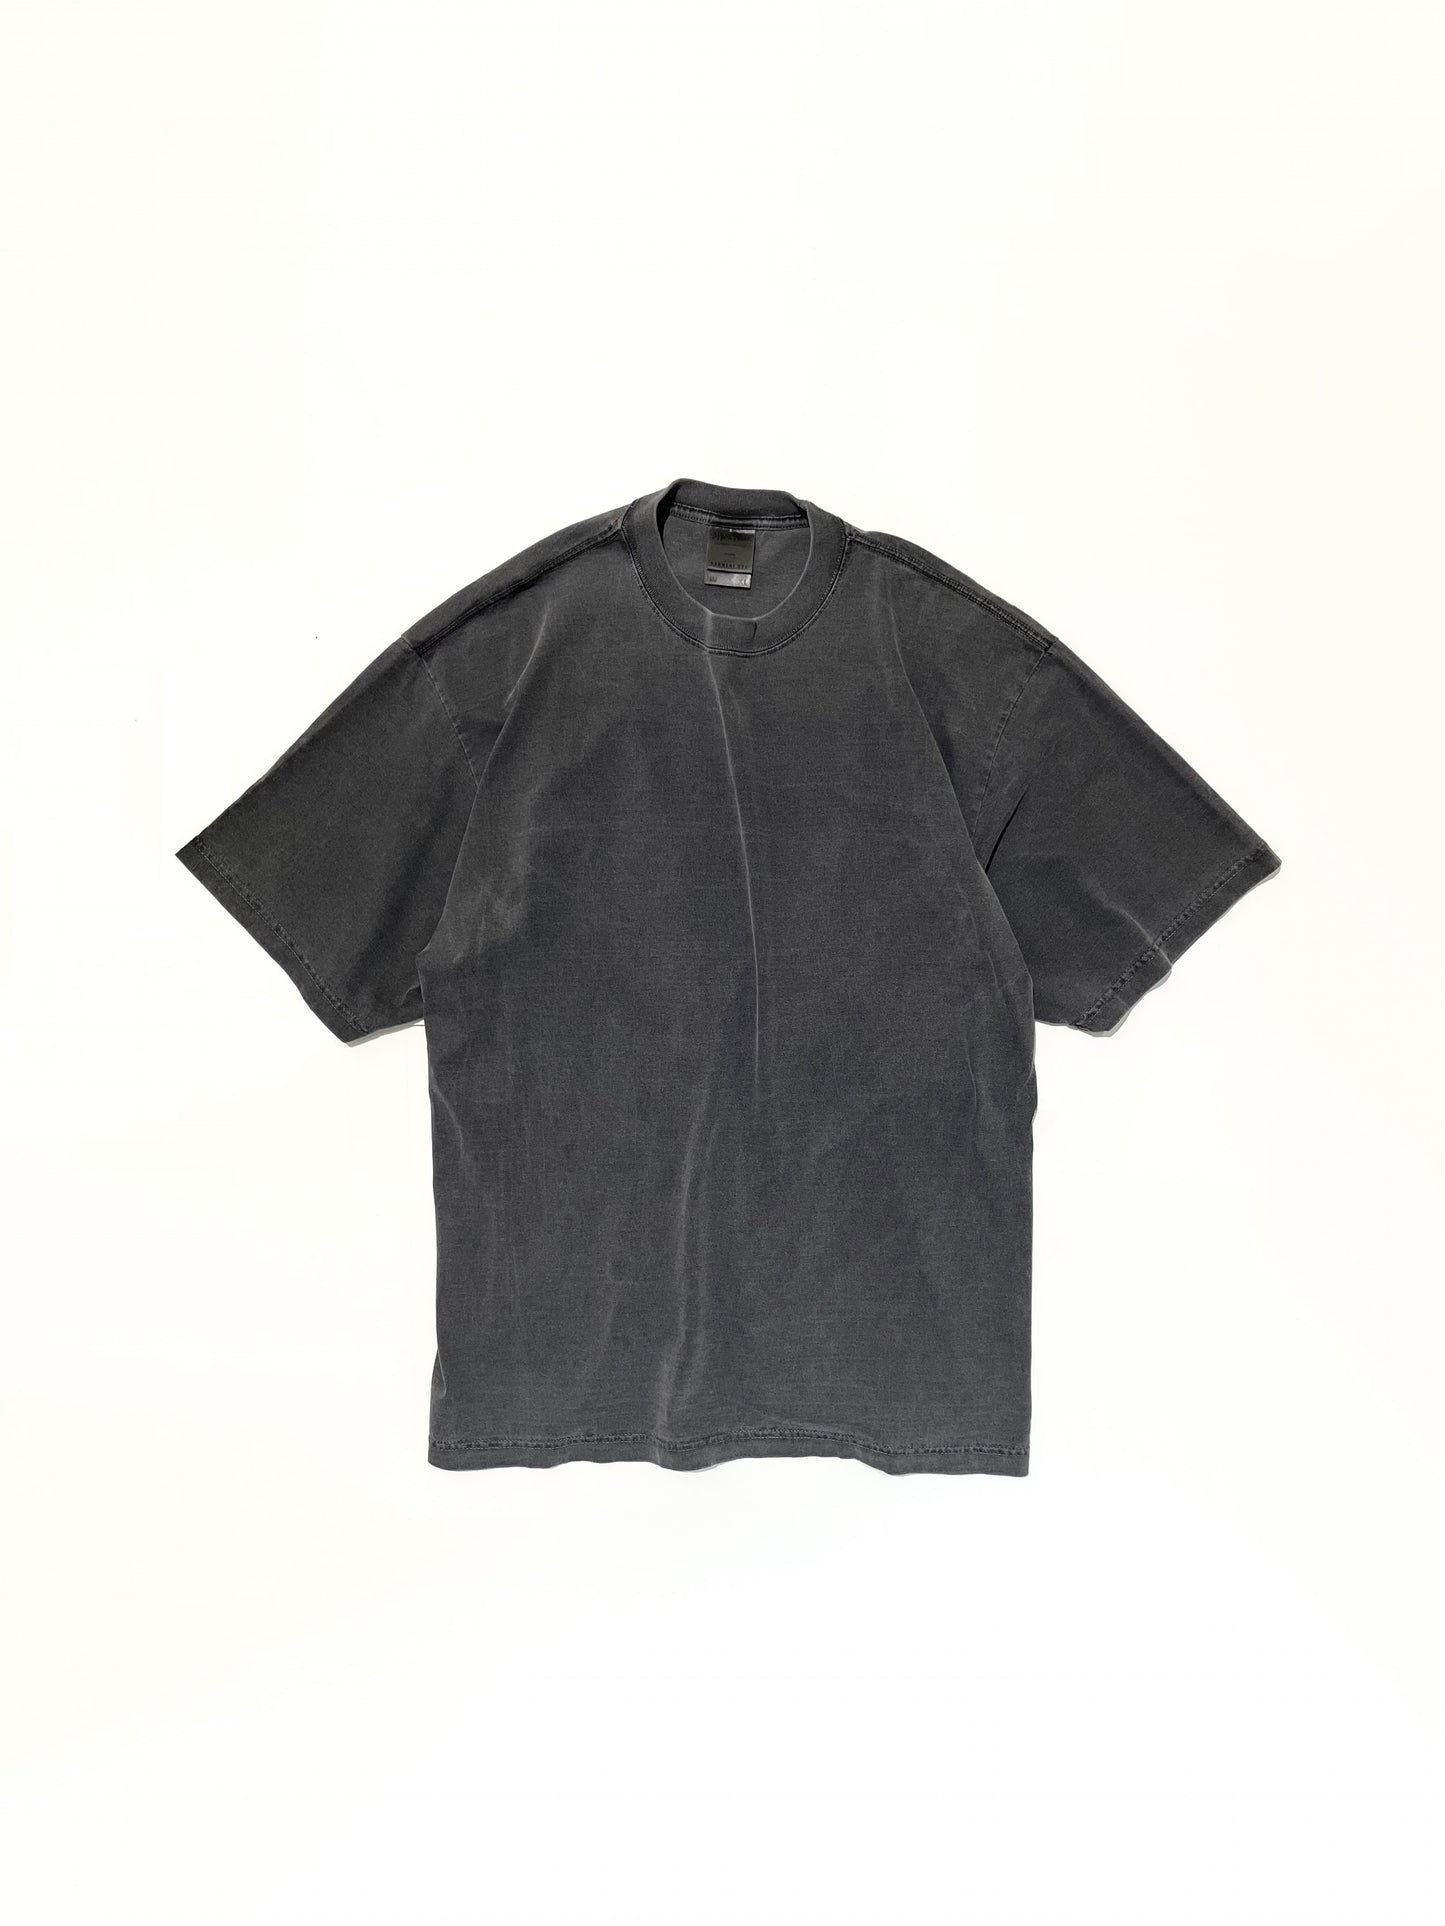 Shaka Wear 7.5oz. Max Heavyweight Garment Dye T-Shirt - Shadow